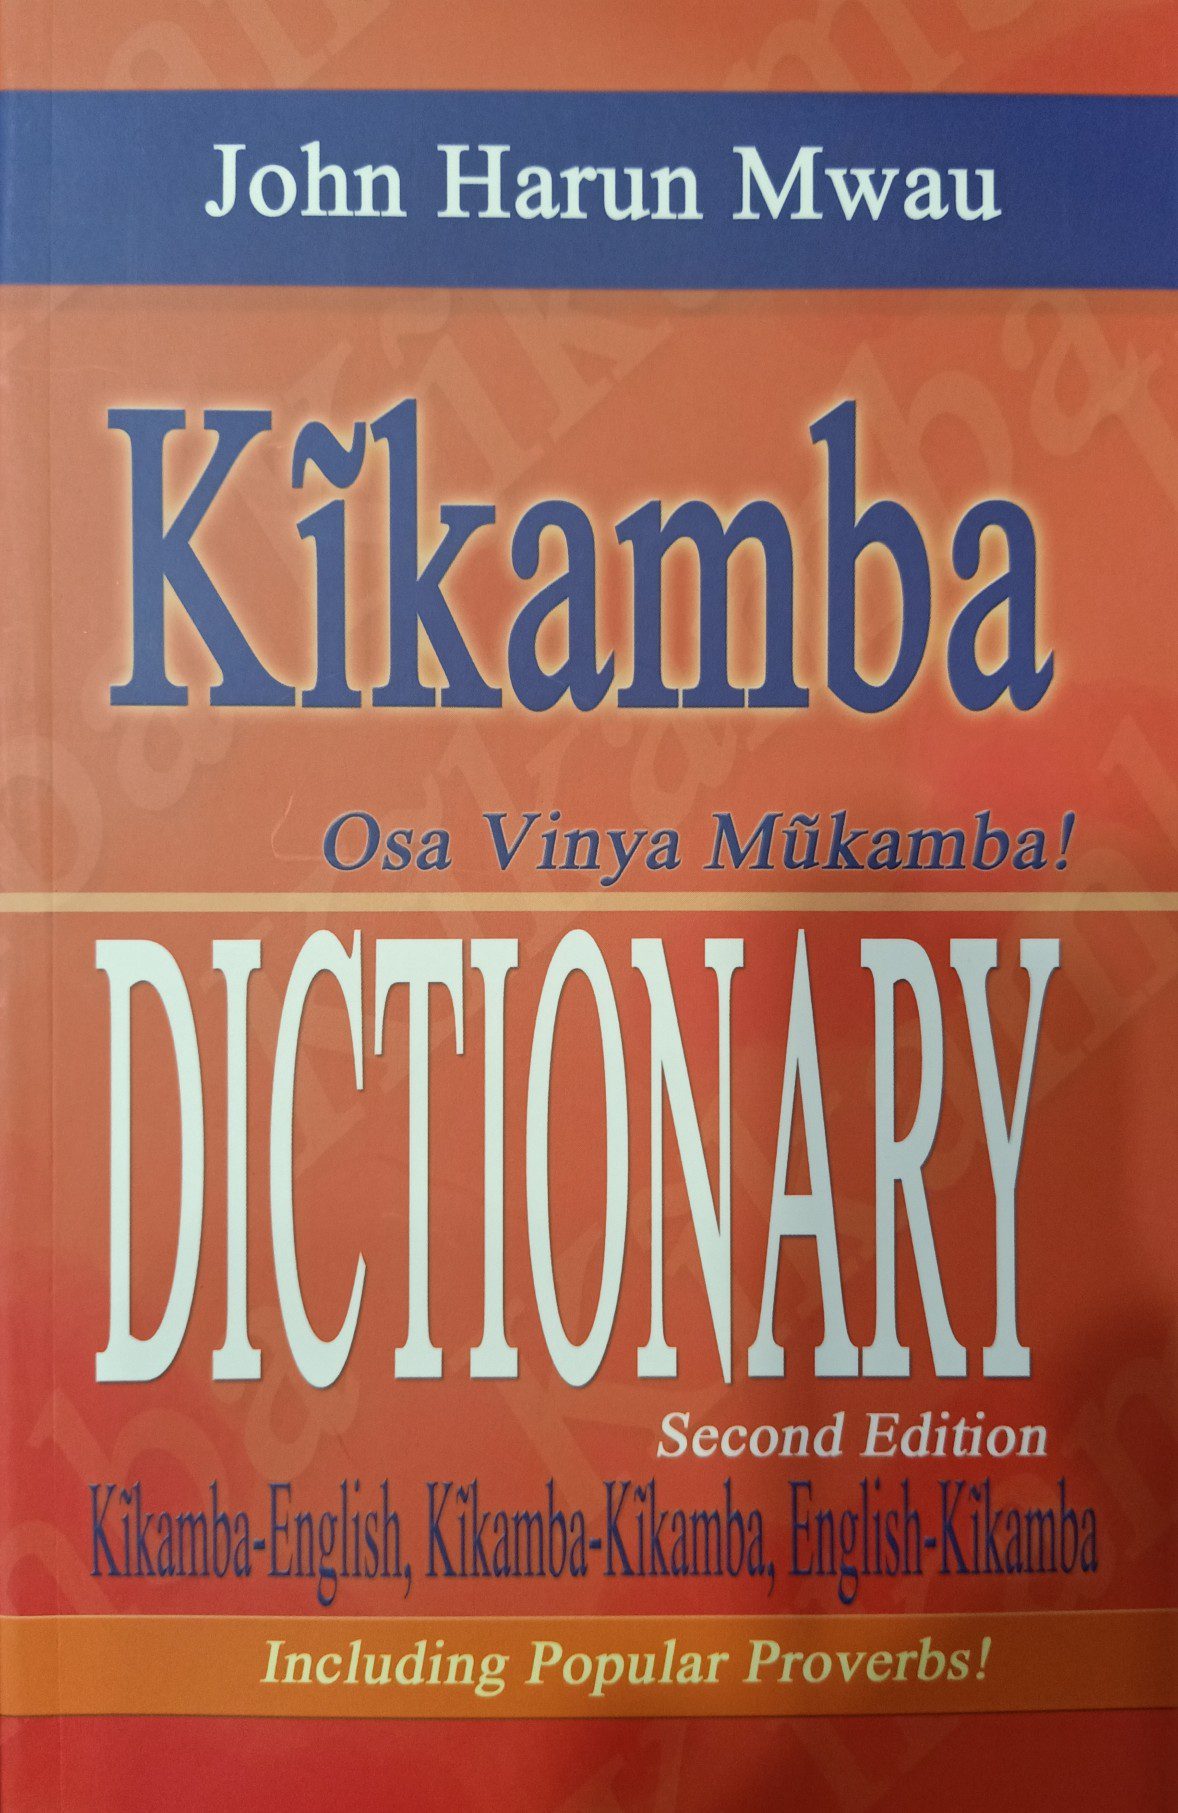 Kikamba Dictionary nuriakenya